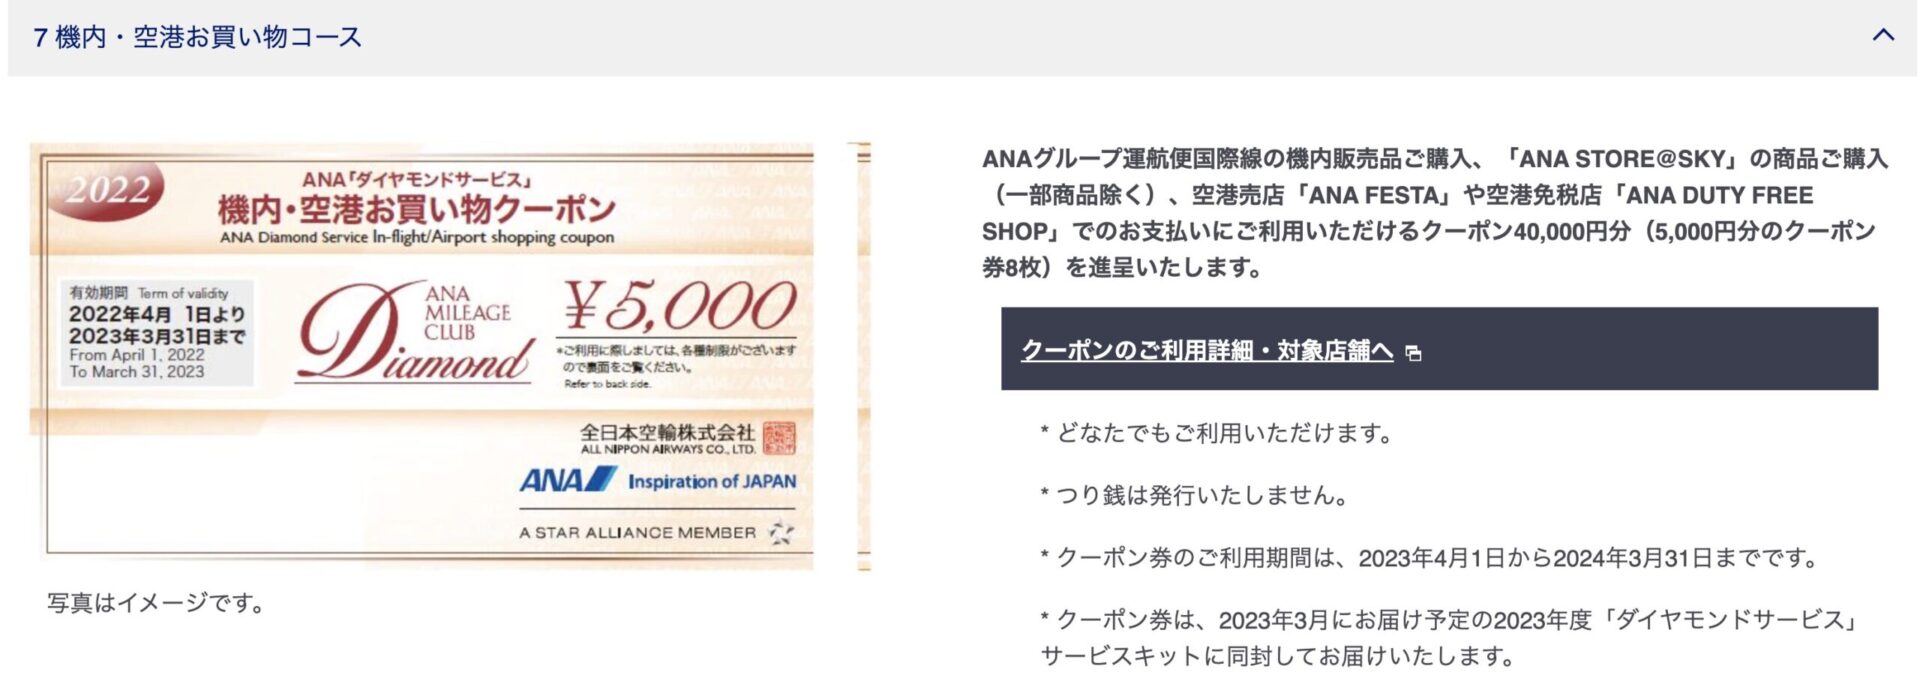 ANA国内線・国際線共通機内販売用クーポン5,000円×8枚〜2022年3月